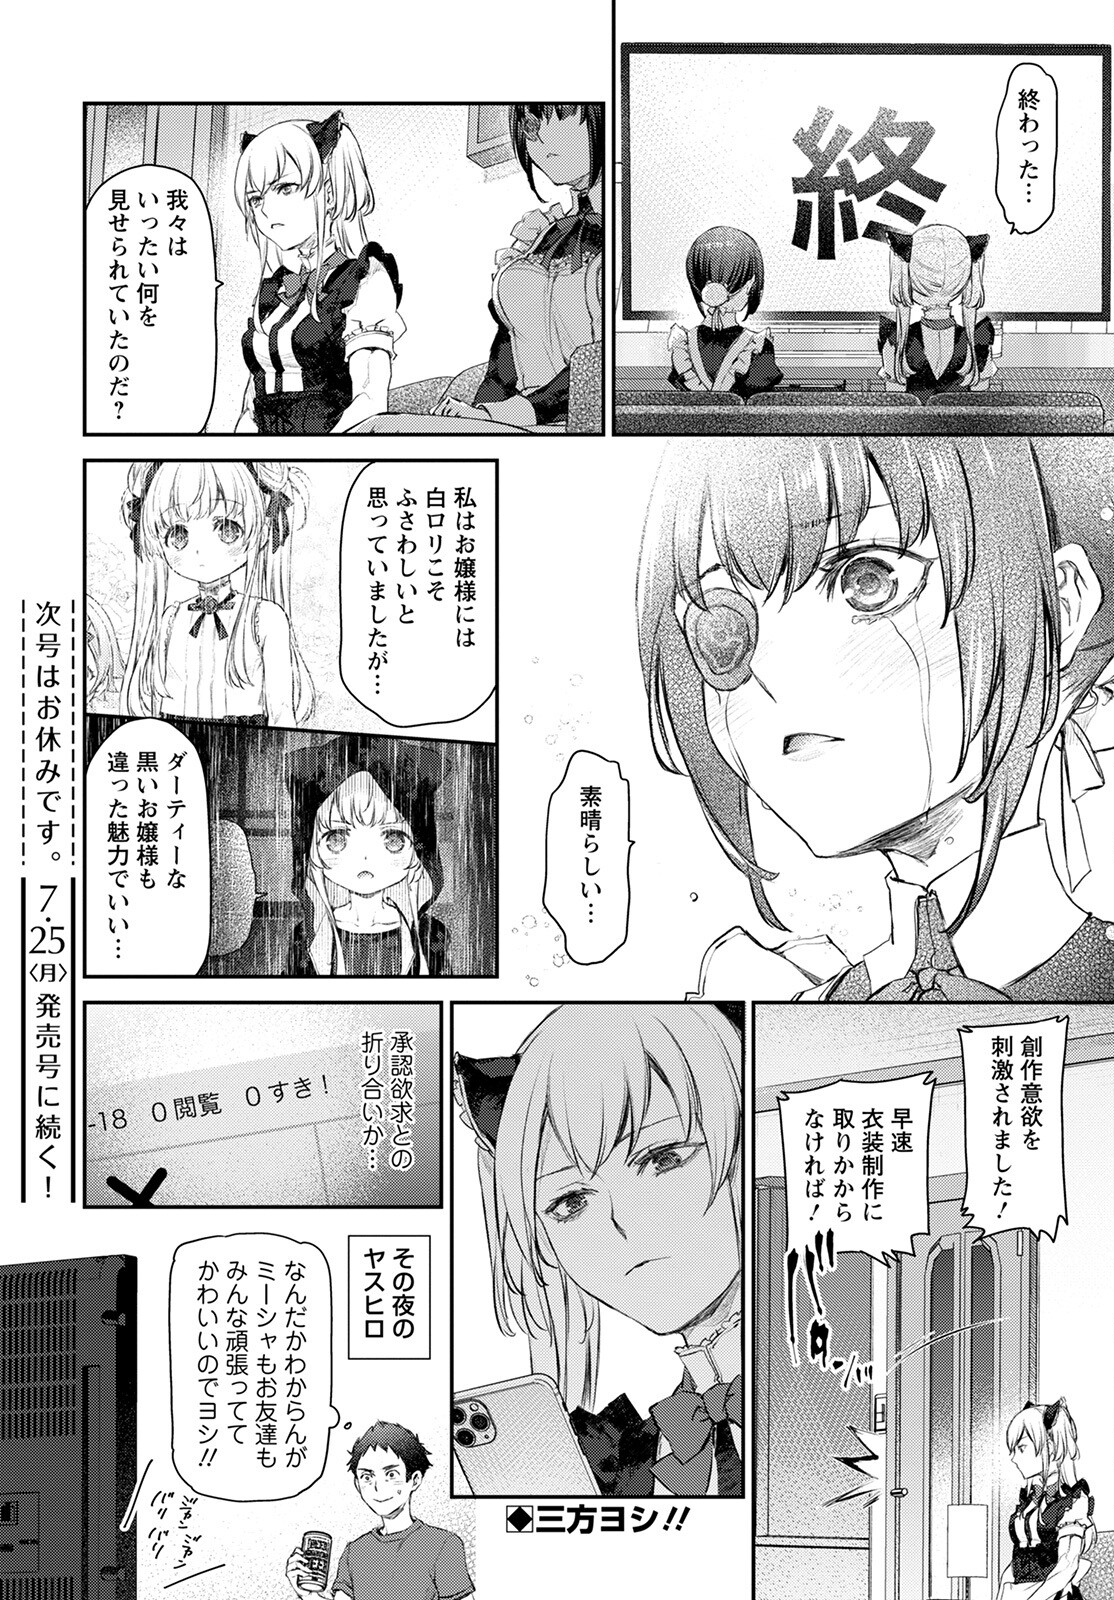 Uchi no Maid ga Uzasugiru! - Chapter 53 - Page 26